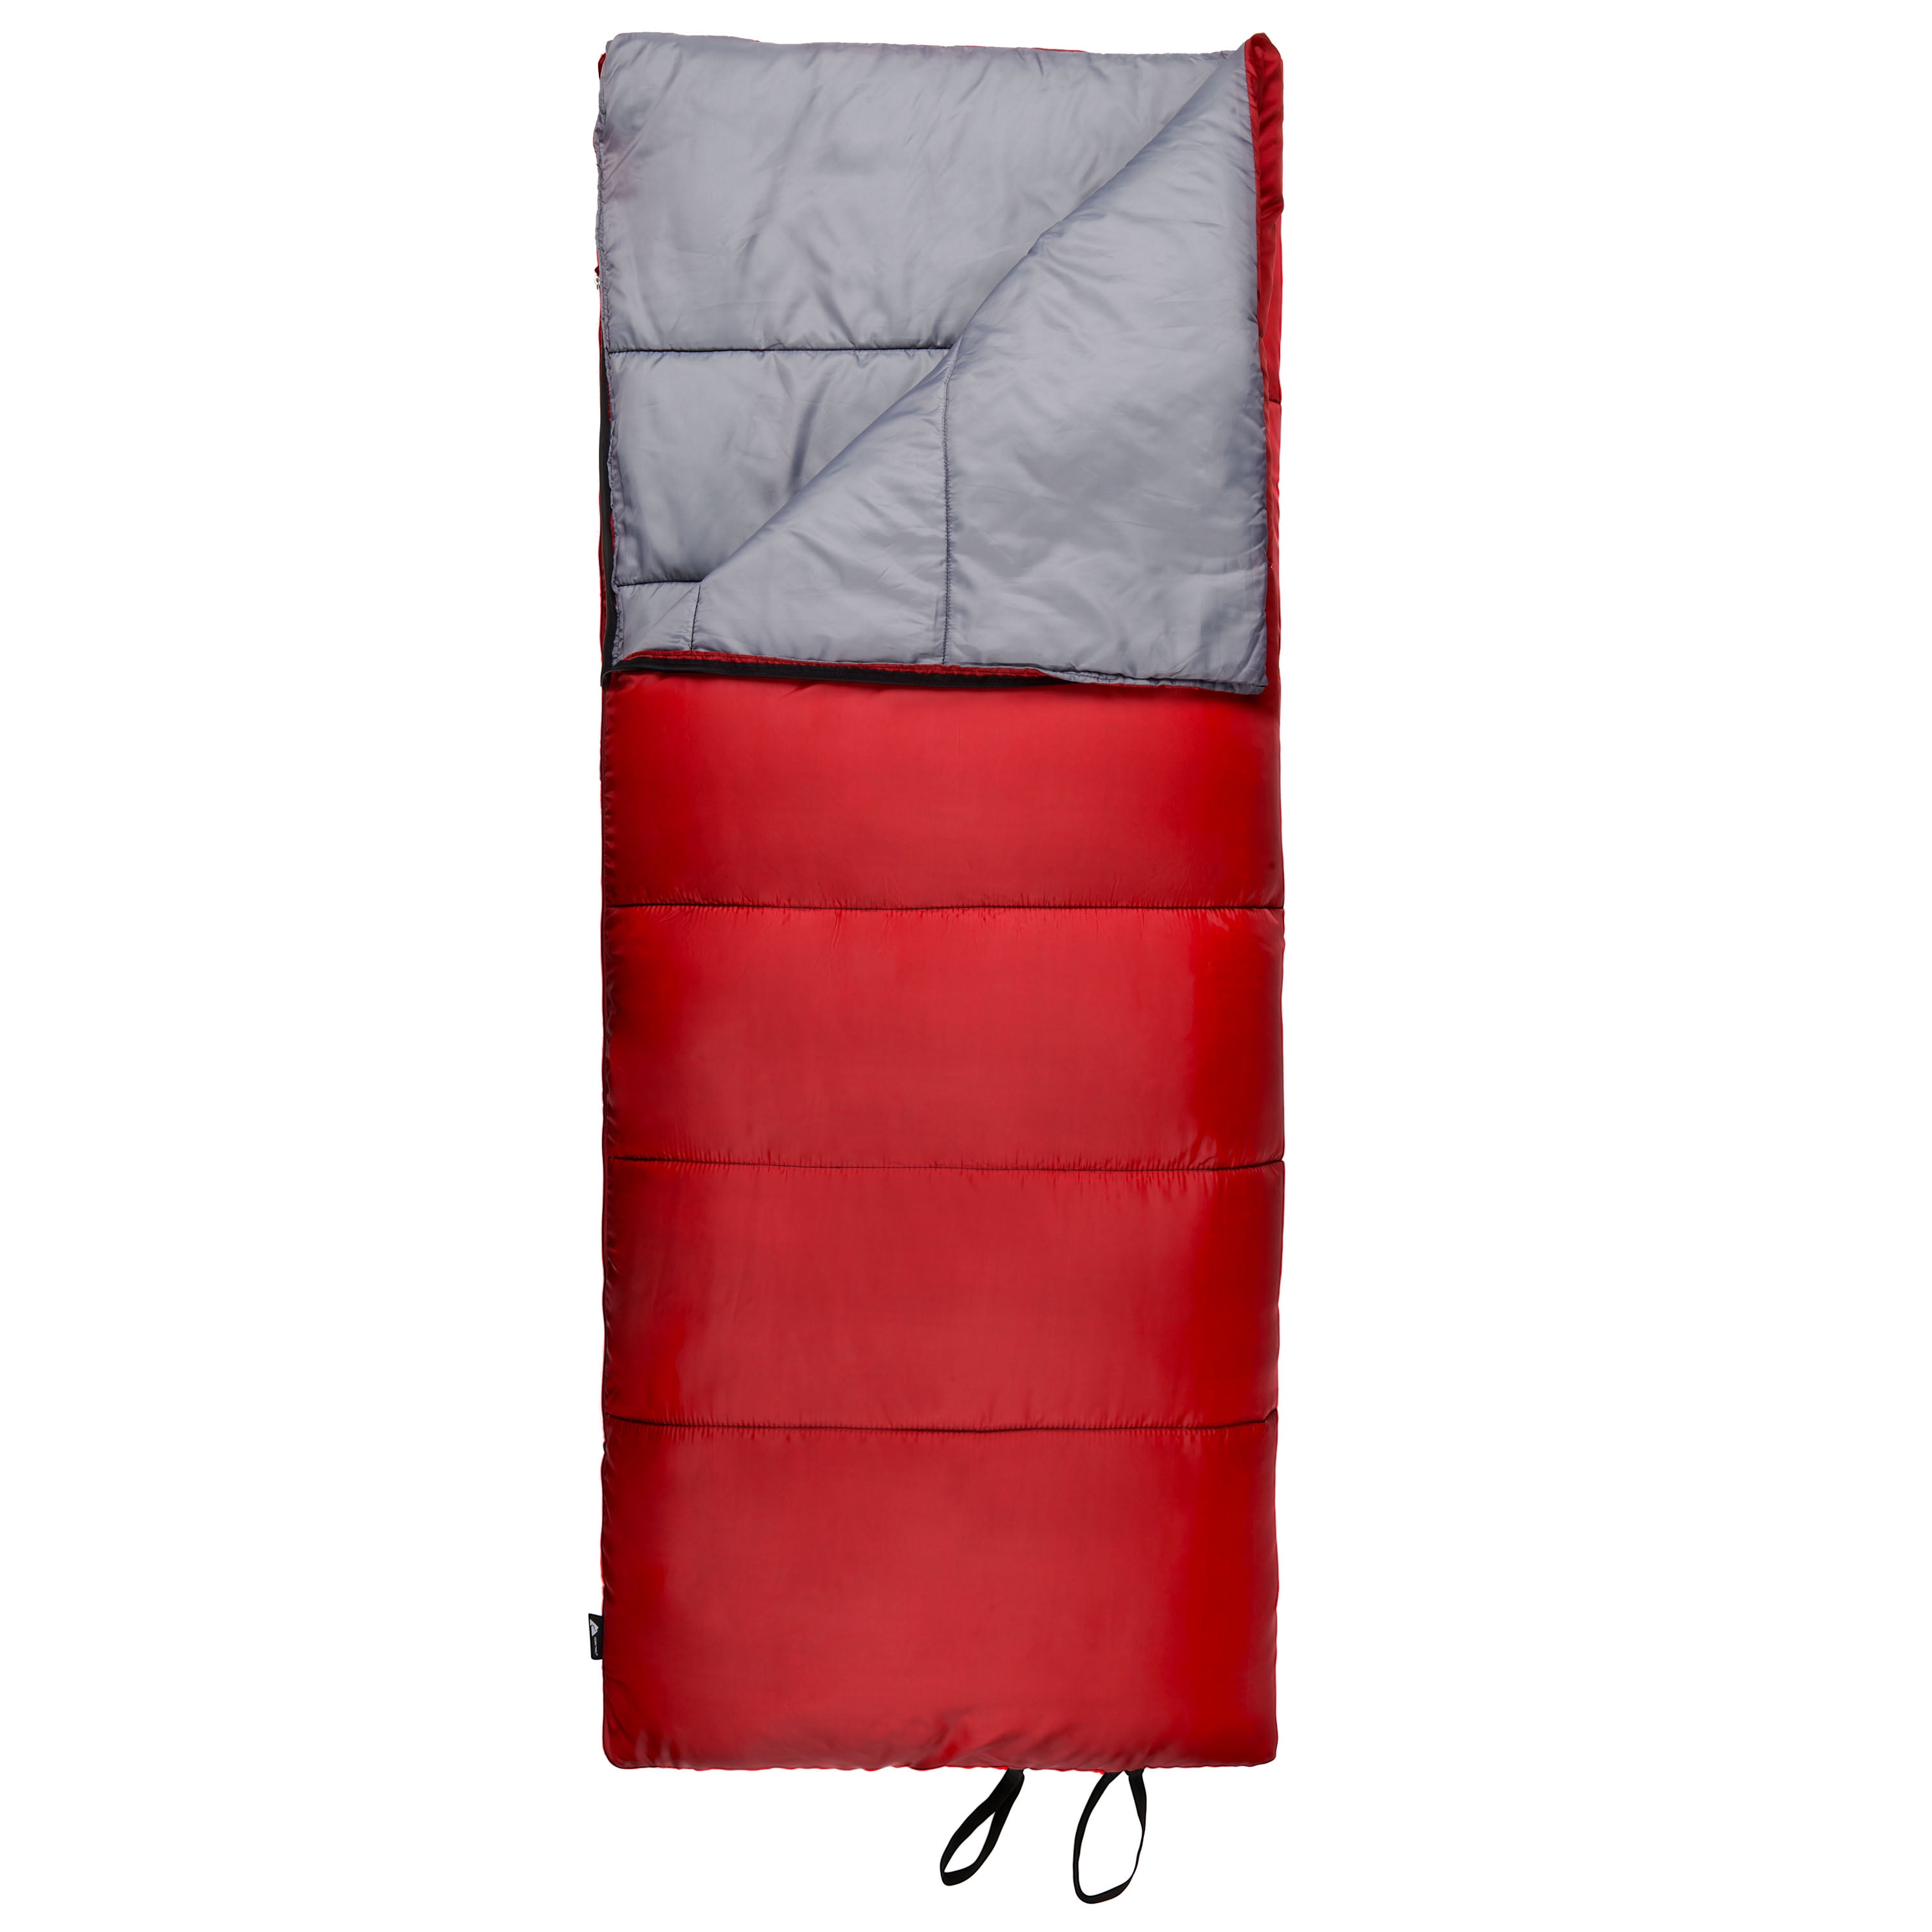 Discover 65+ ozark trail sleeping bags - in.duhocakina